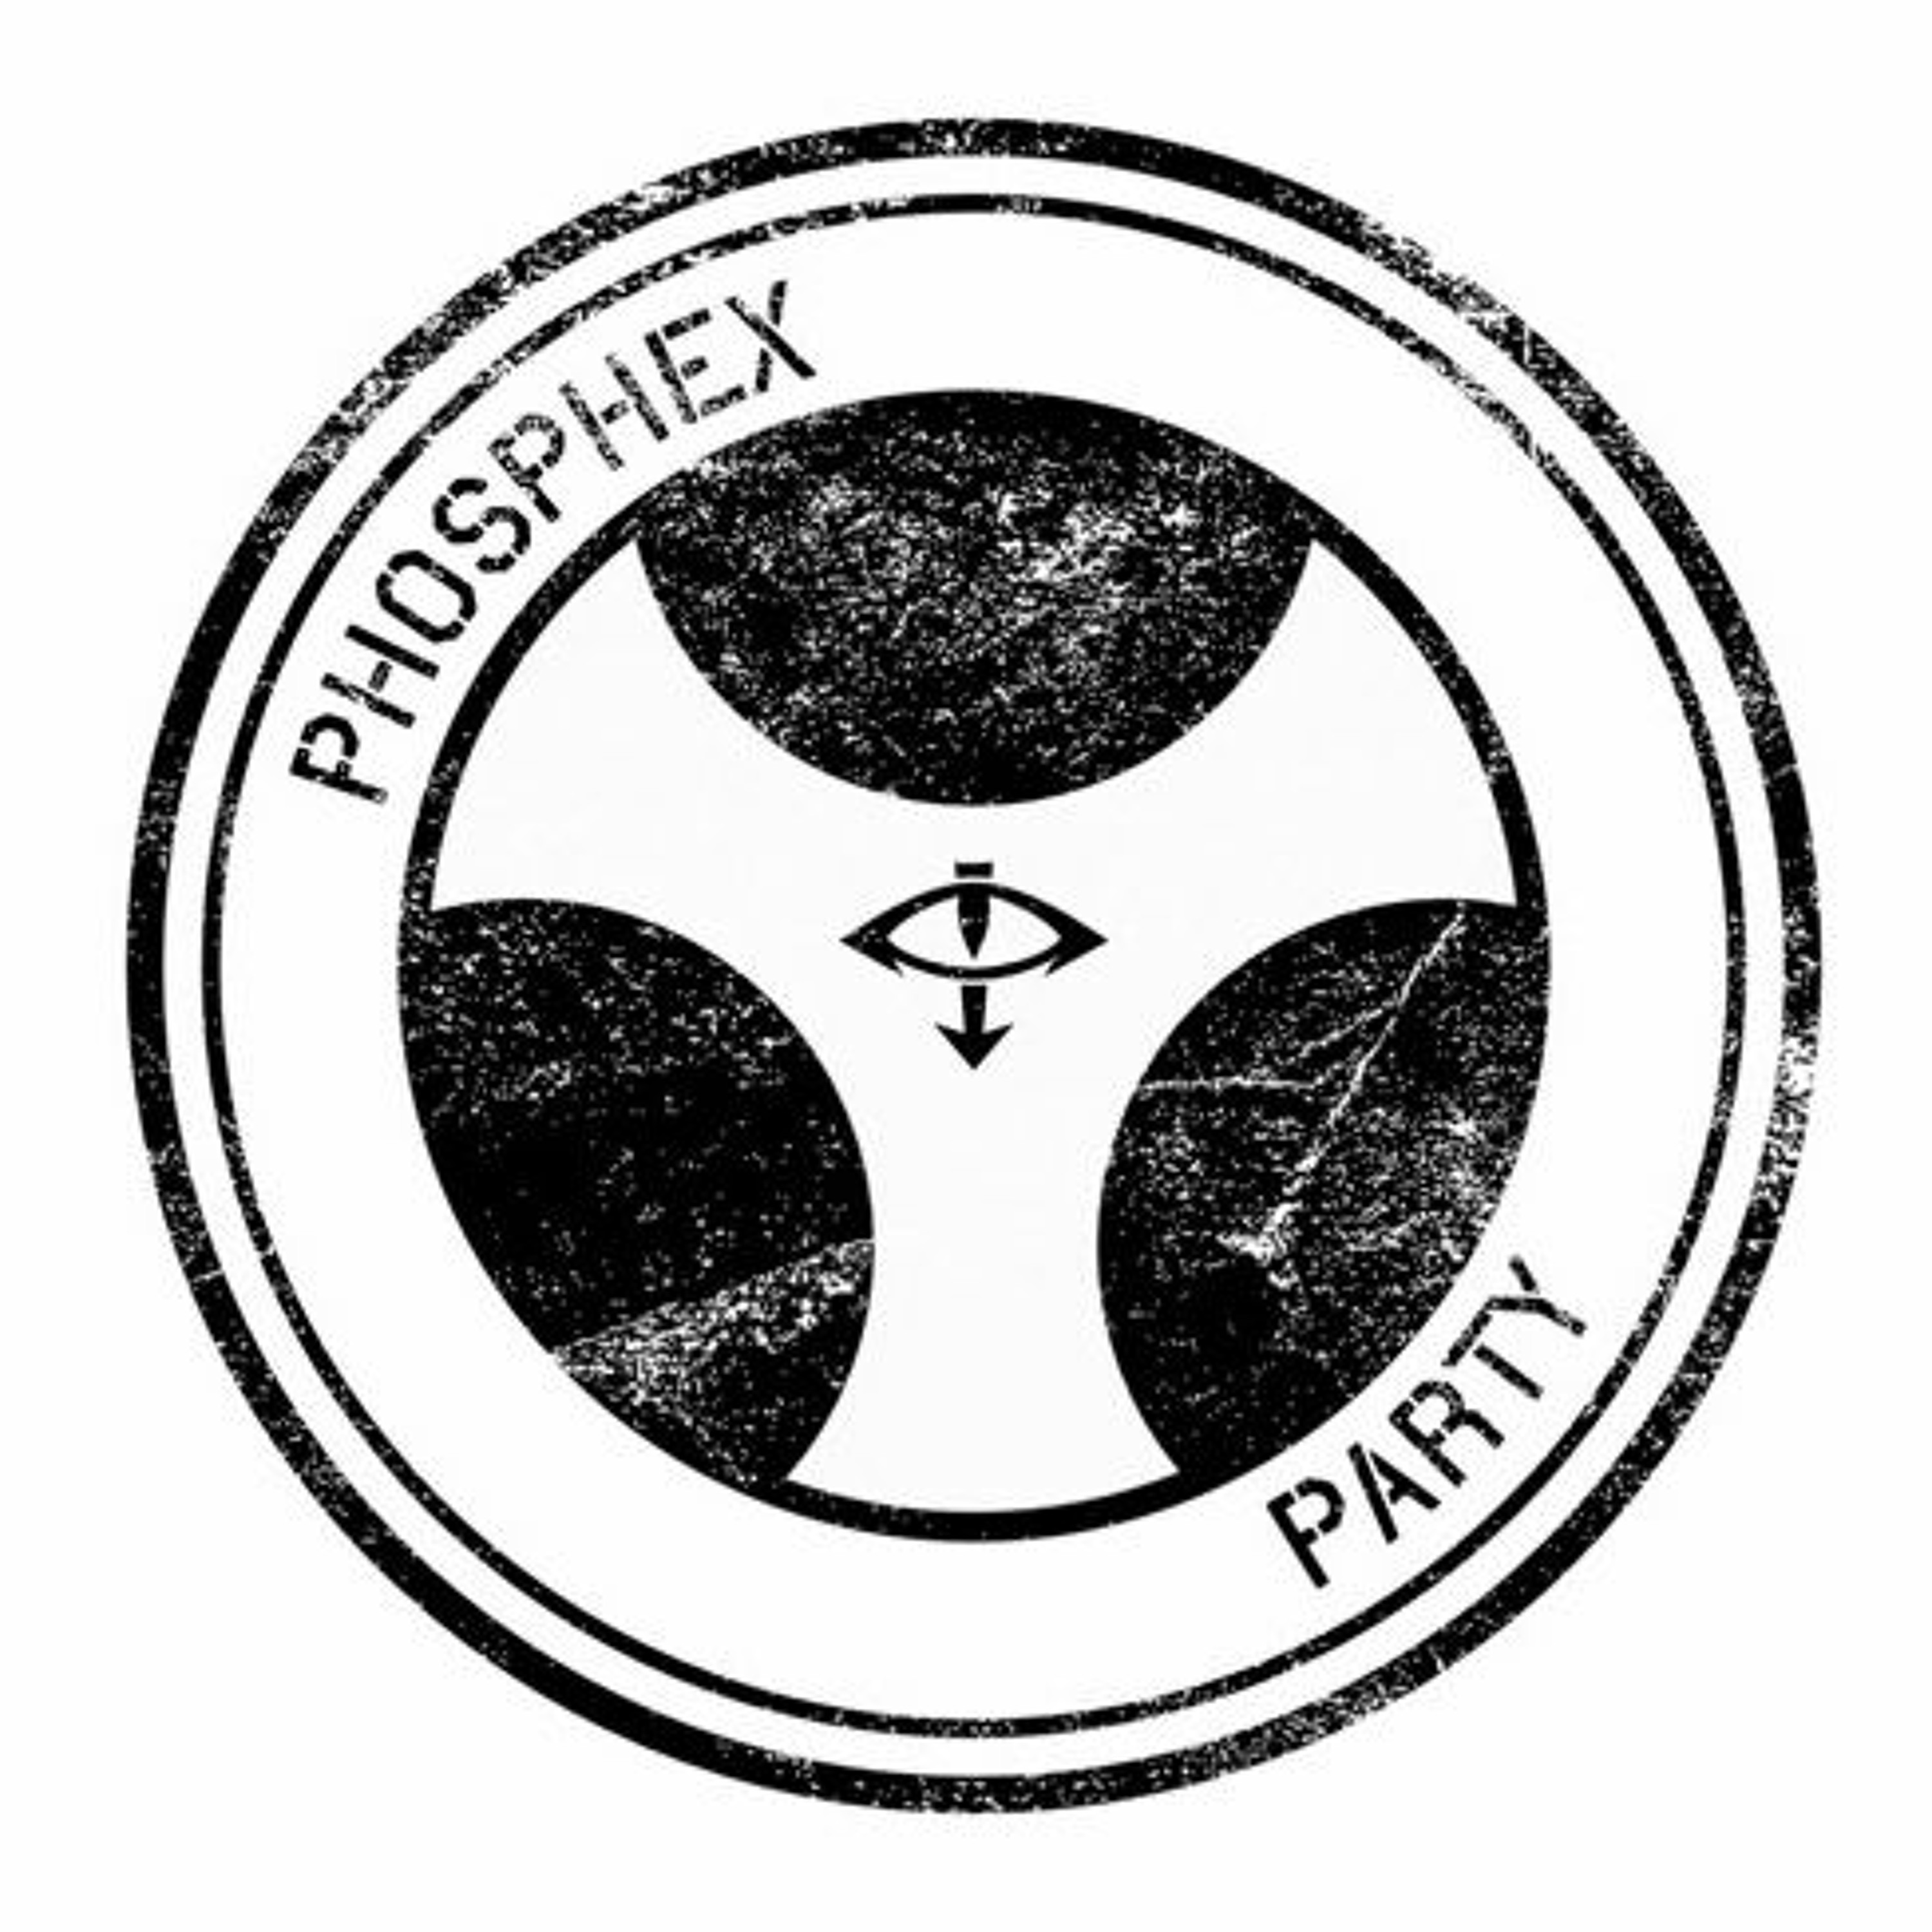 Phosphex Party Episode 35  - Dans Back But Spins Gone, Battle Bling! and The Court Case